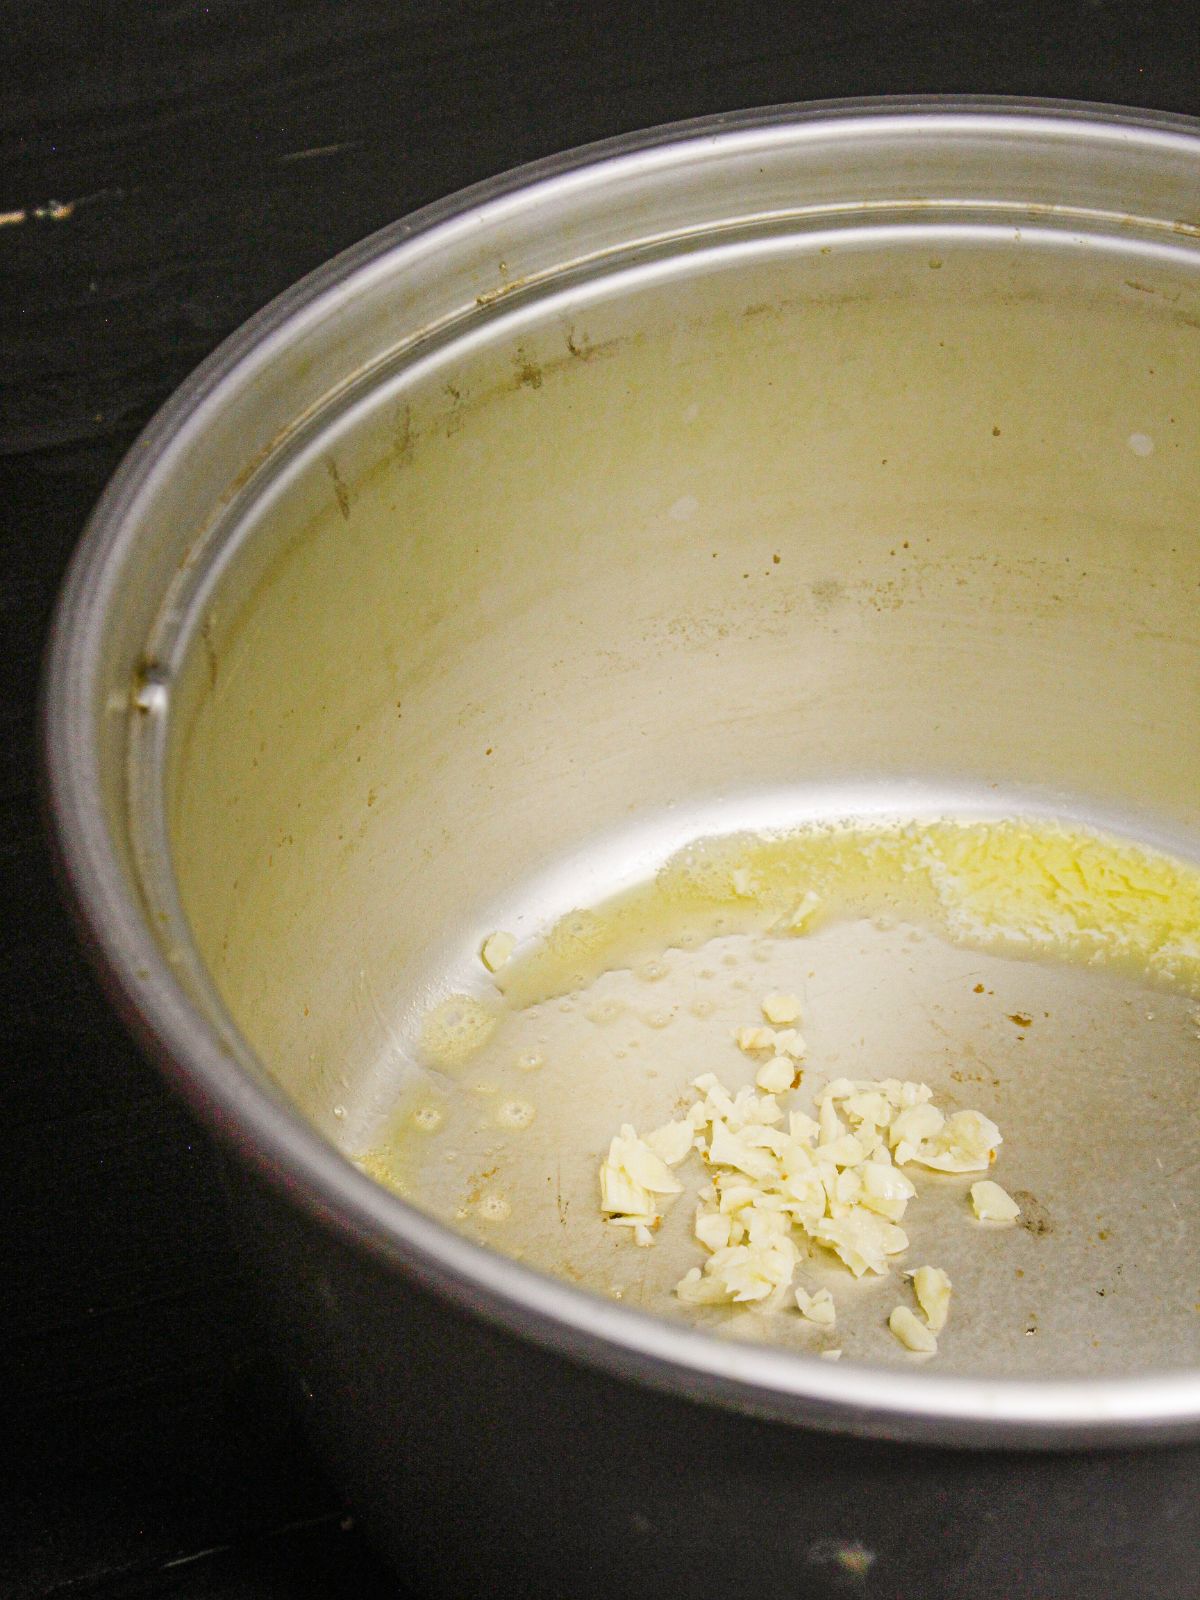 Add chopped garlic to the pot